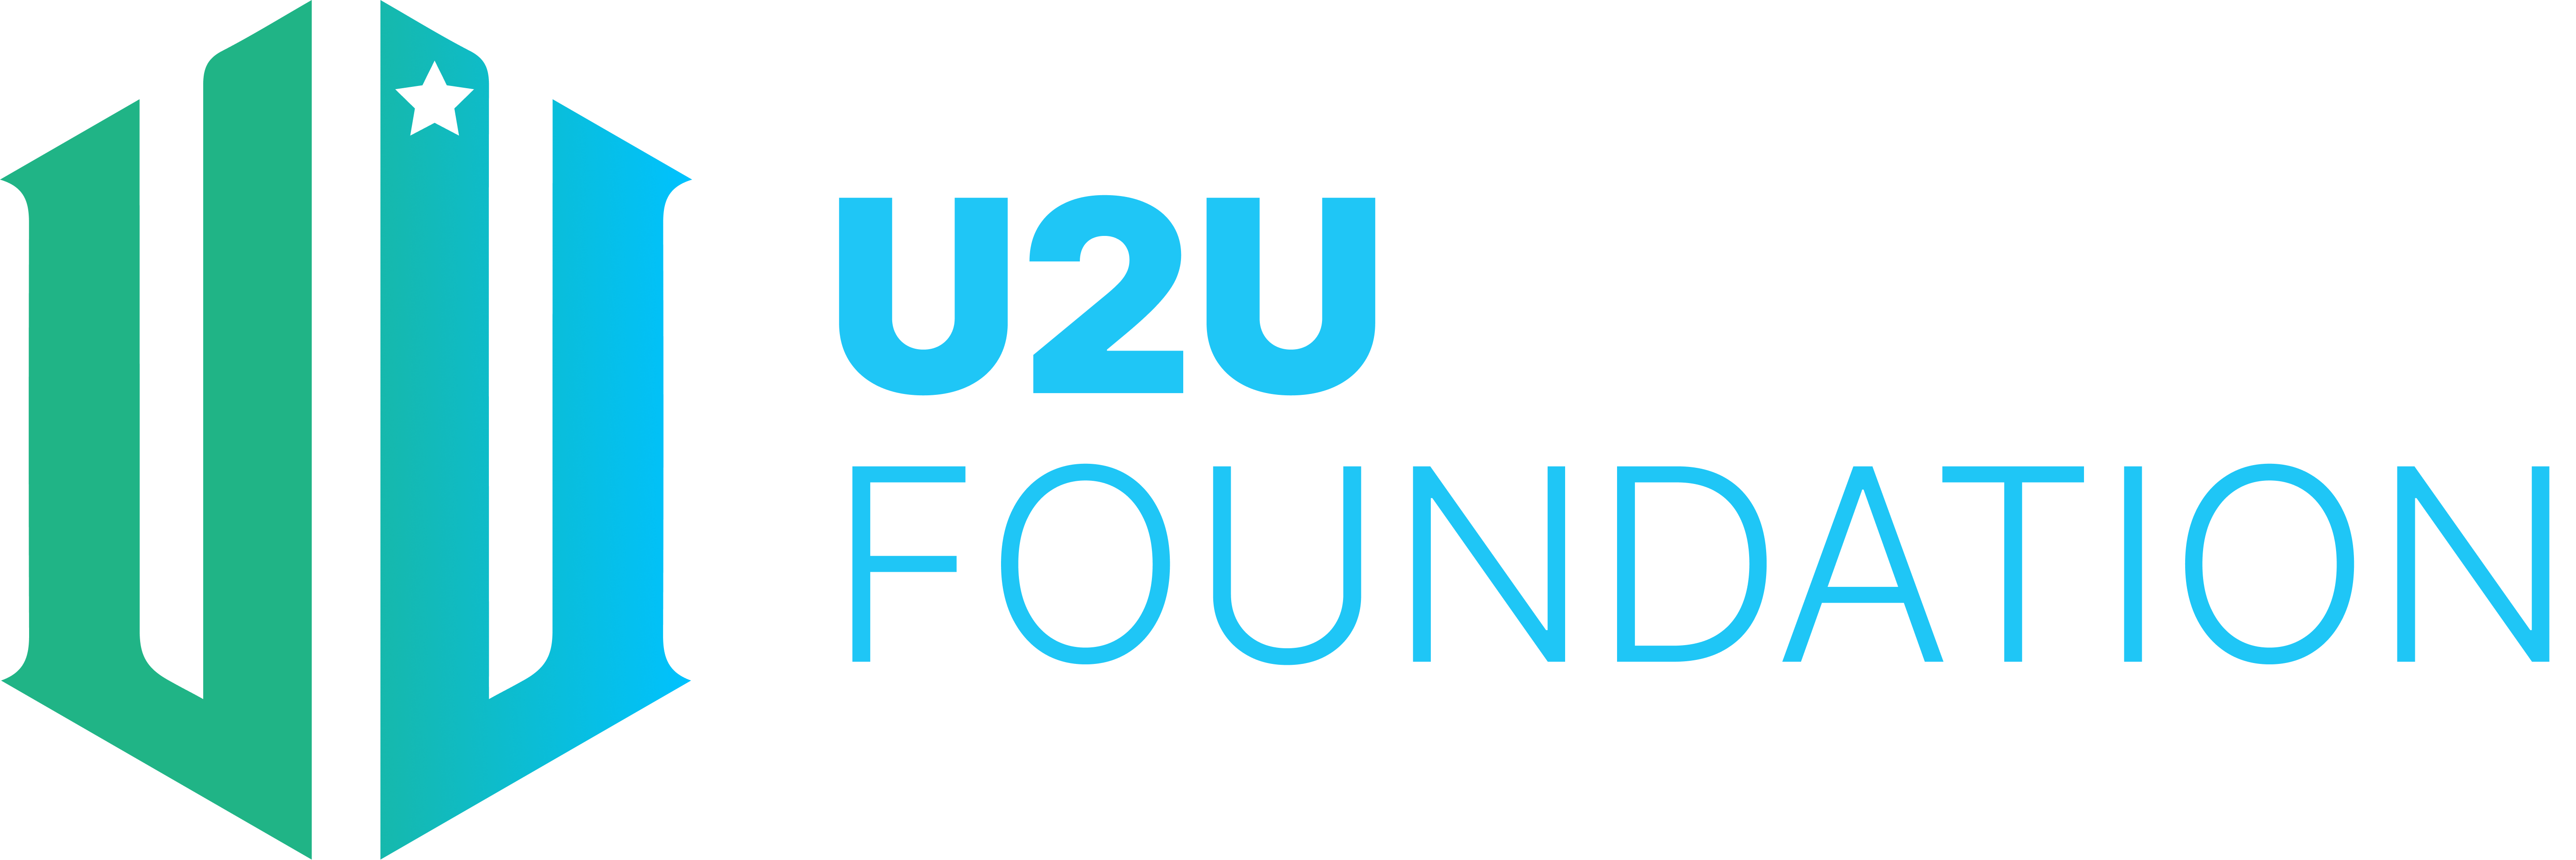 [Sponsors] U2U